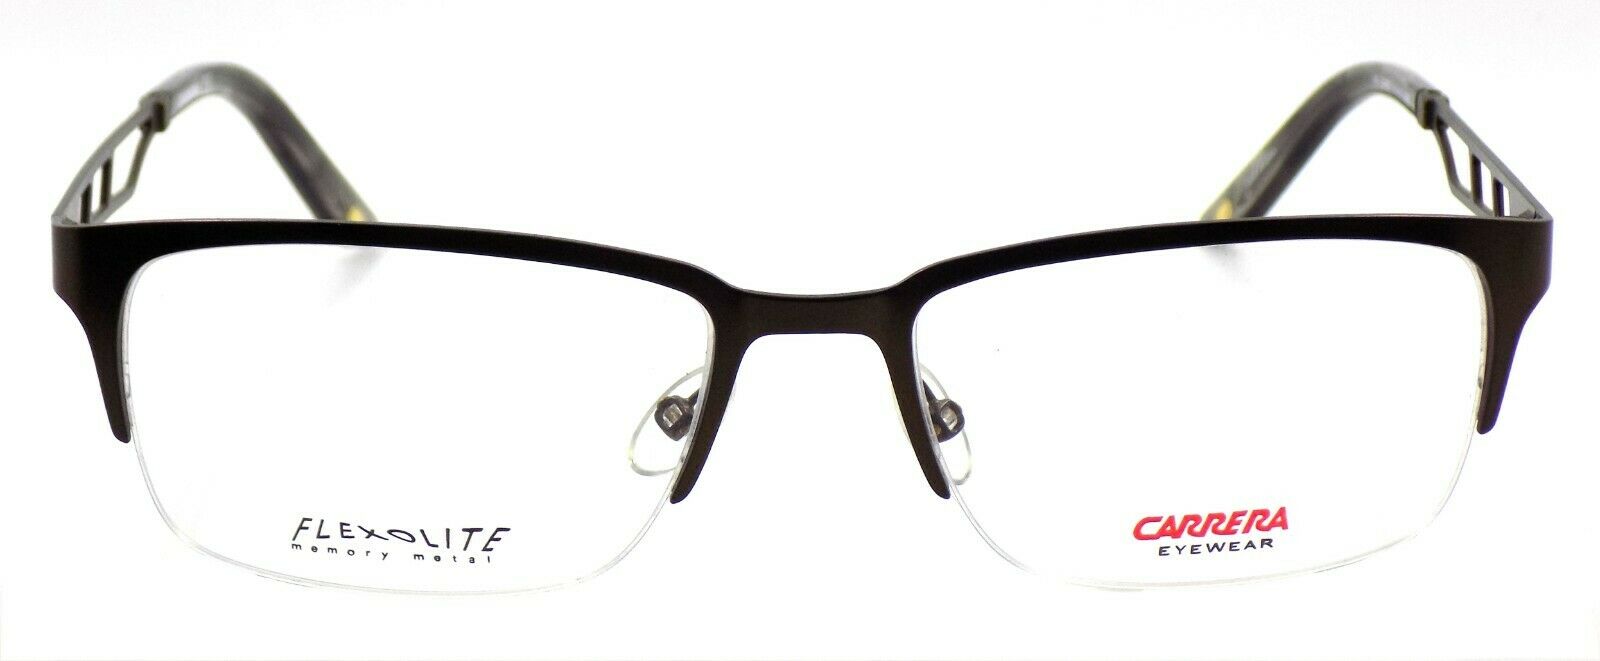 2-Carrera CA7601 05BZ Men's Eyeglasses Frames Half-rim 54-18-145 Matte Chocolate-716737432624-IKSpecs